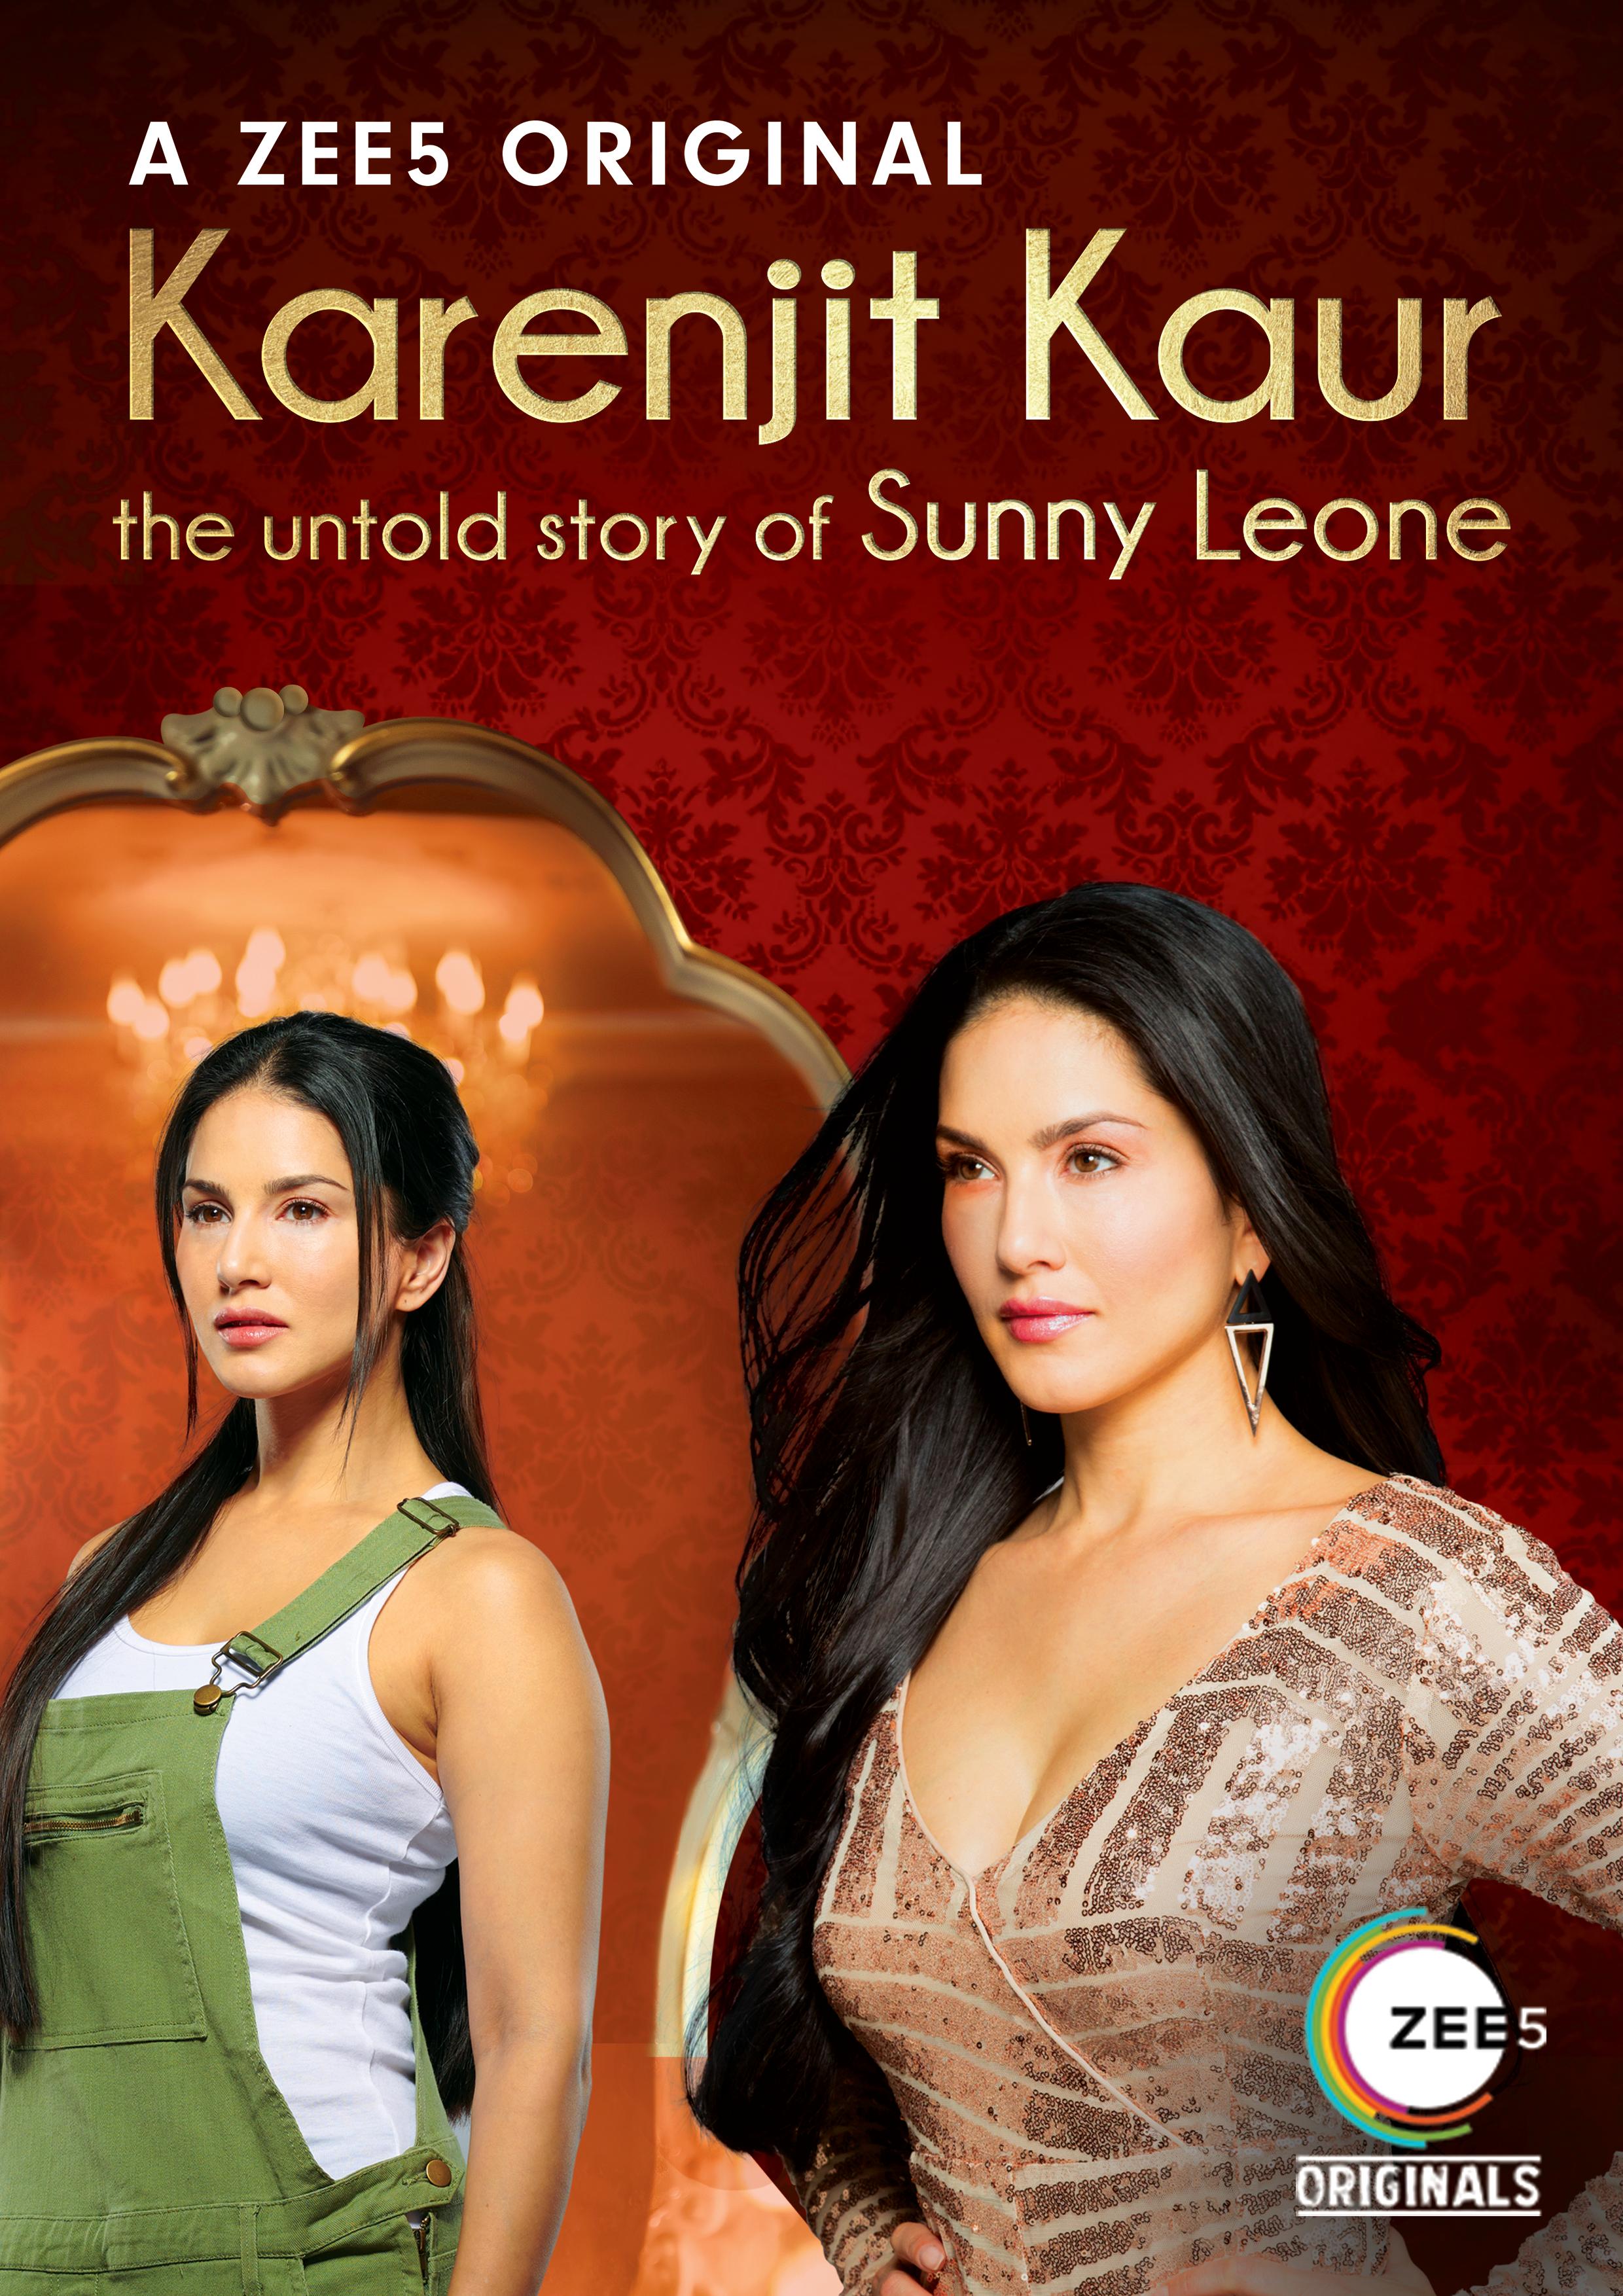 Karenjit Kaur - The Untold Story of Sunny Leone